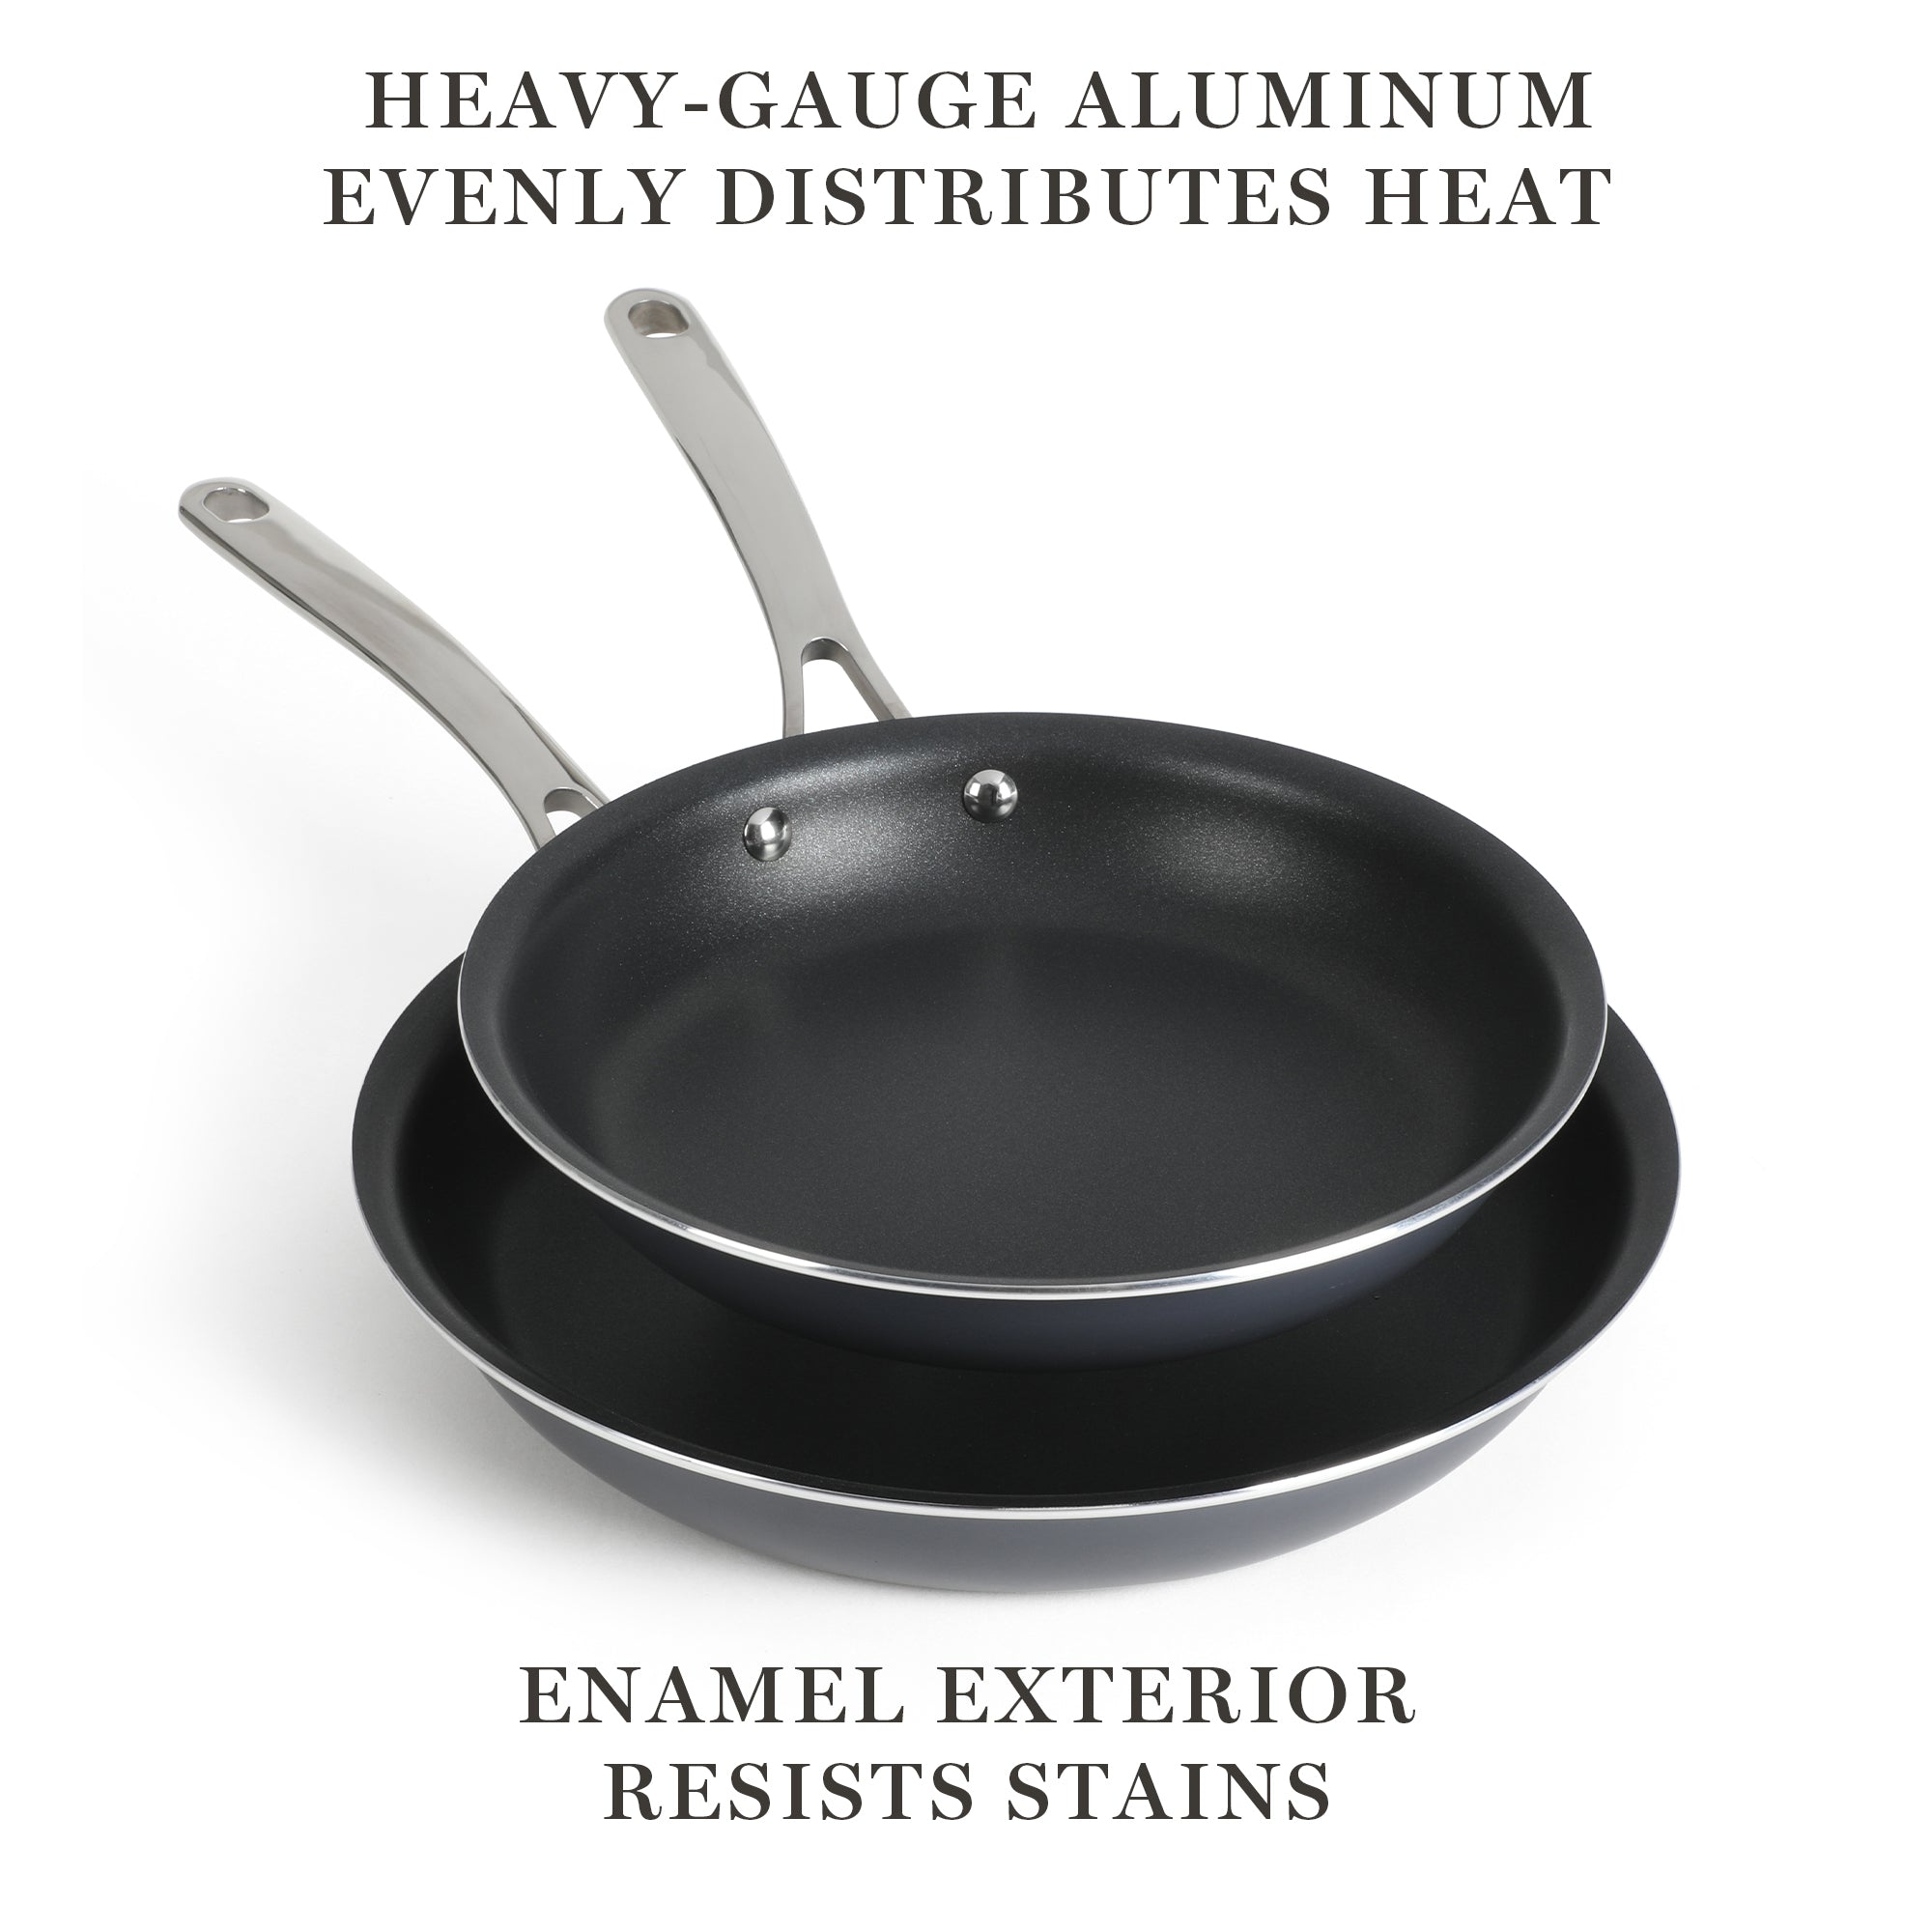 Martha Stewart Lockton Premium 10-Piece Enameled Heavy Gauge Aluminum Ceramic Nonstick Cookware Set in Red